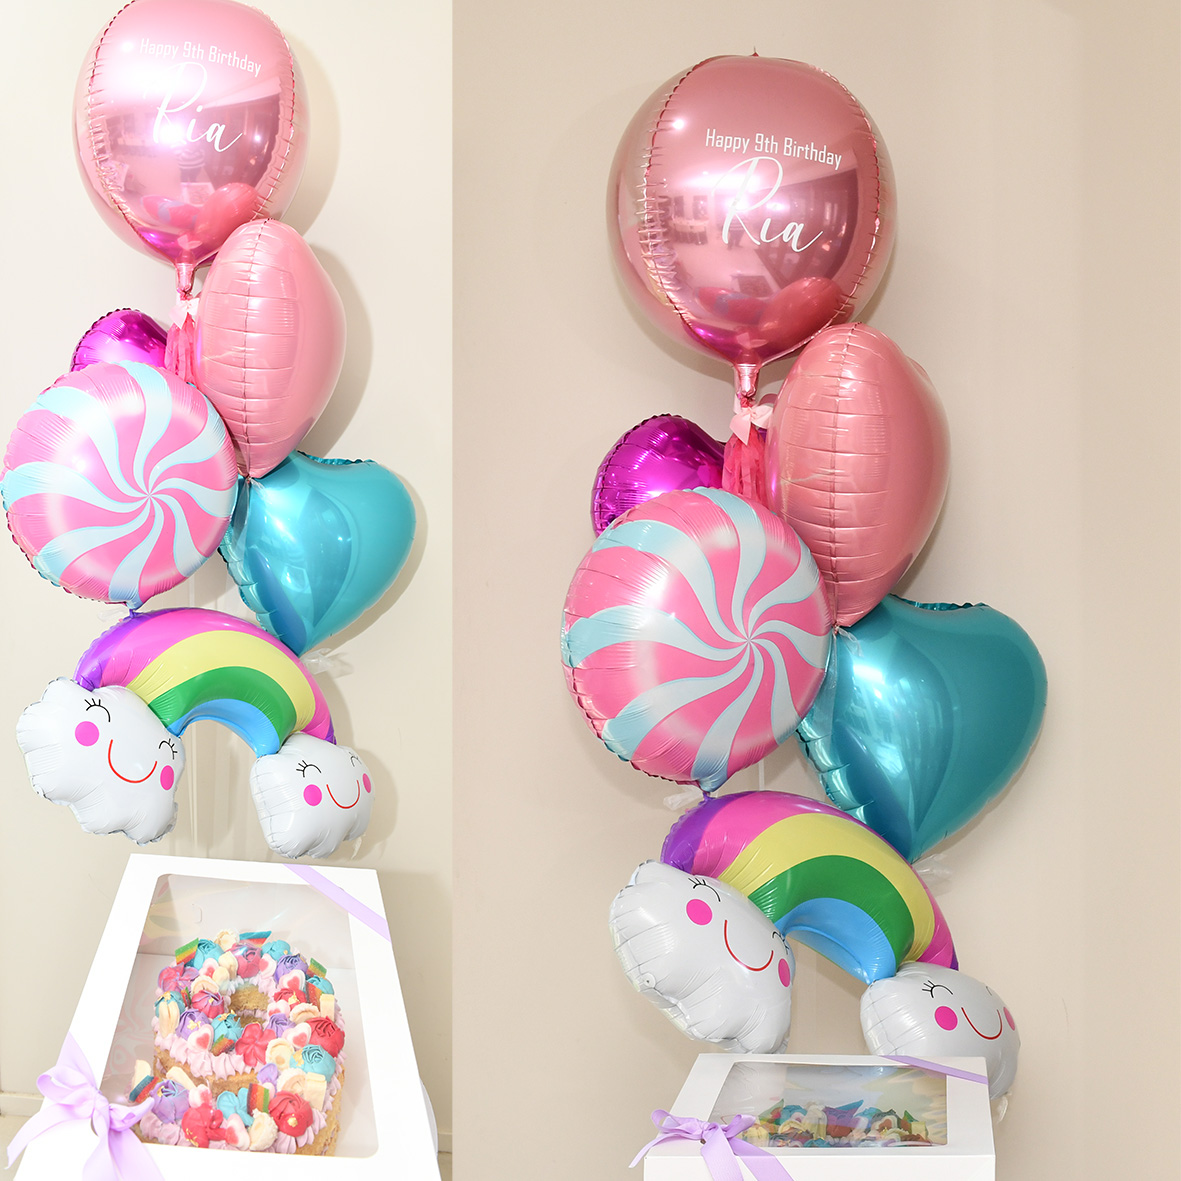 Birthday Cakes & Balloons Sydney Delivery